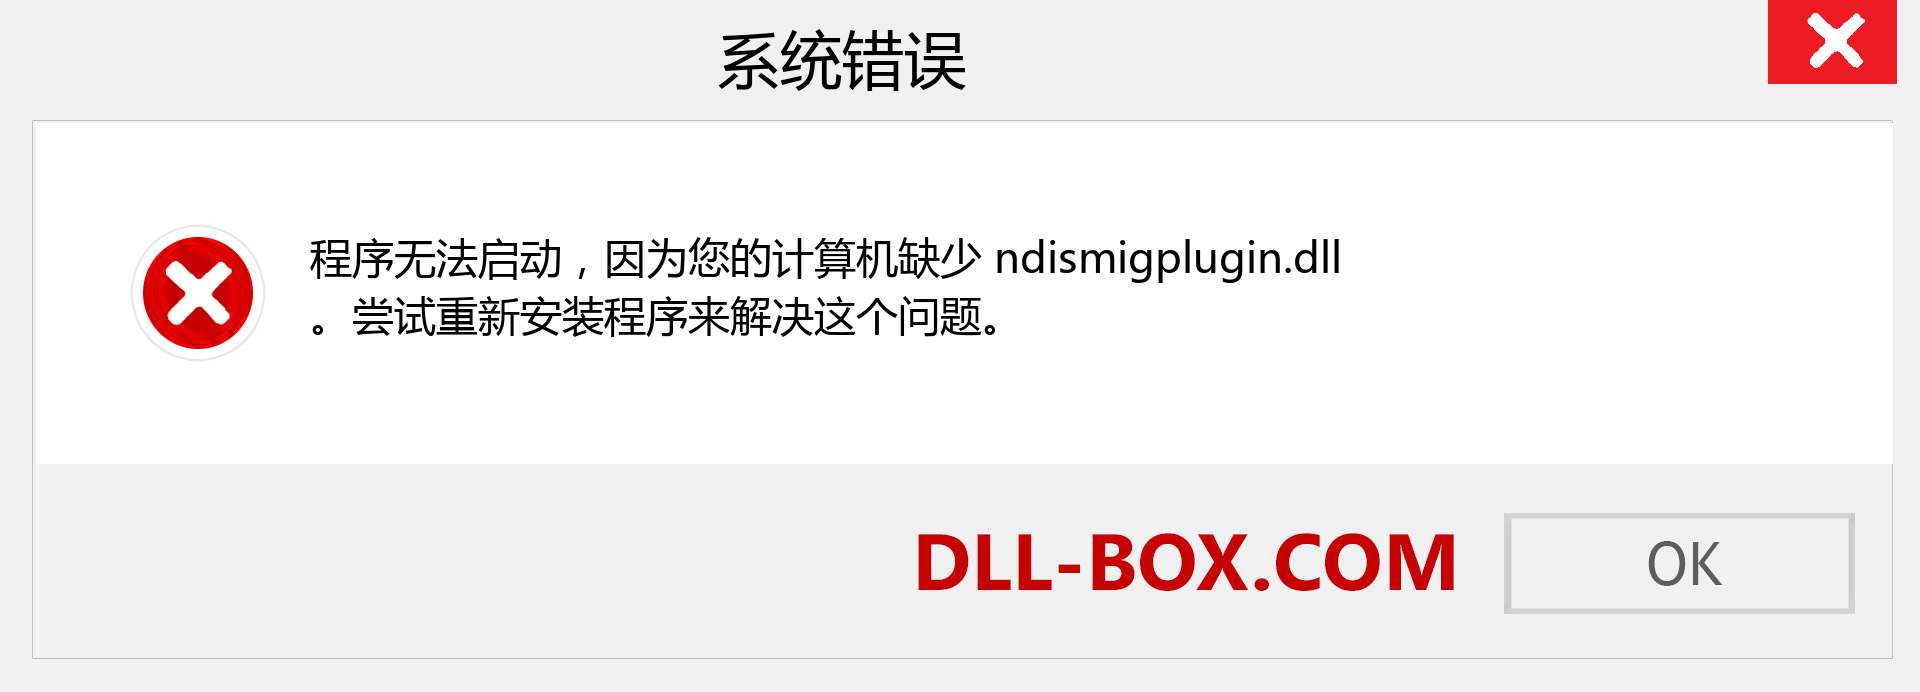 ndismigplugin.dll 文件丢失？。 适用于 Windows 7、8、10 的下载 - 修复 Windows、照片、图像上的 ndismigplugin dll 丢失错误